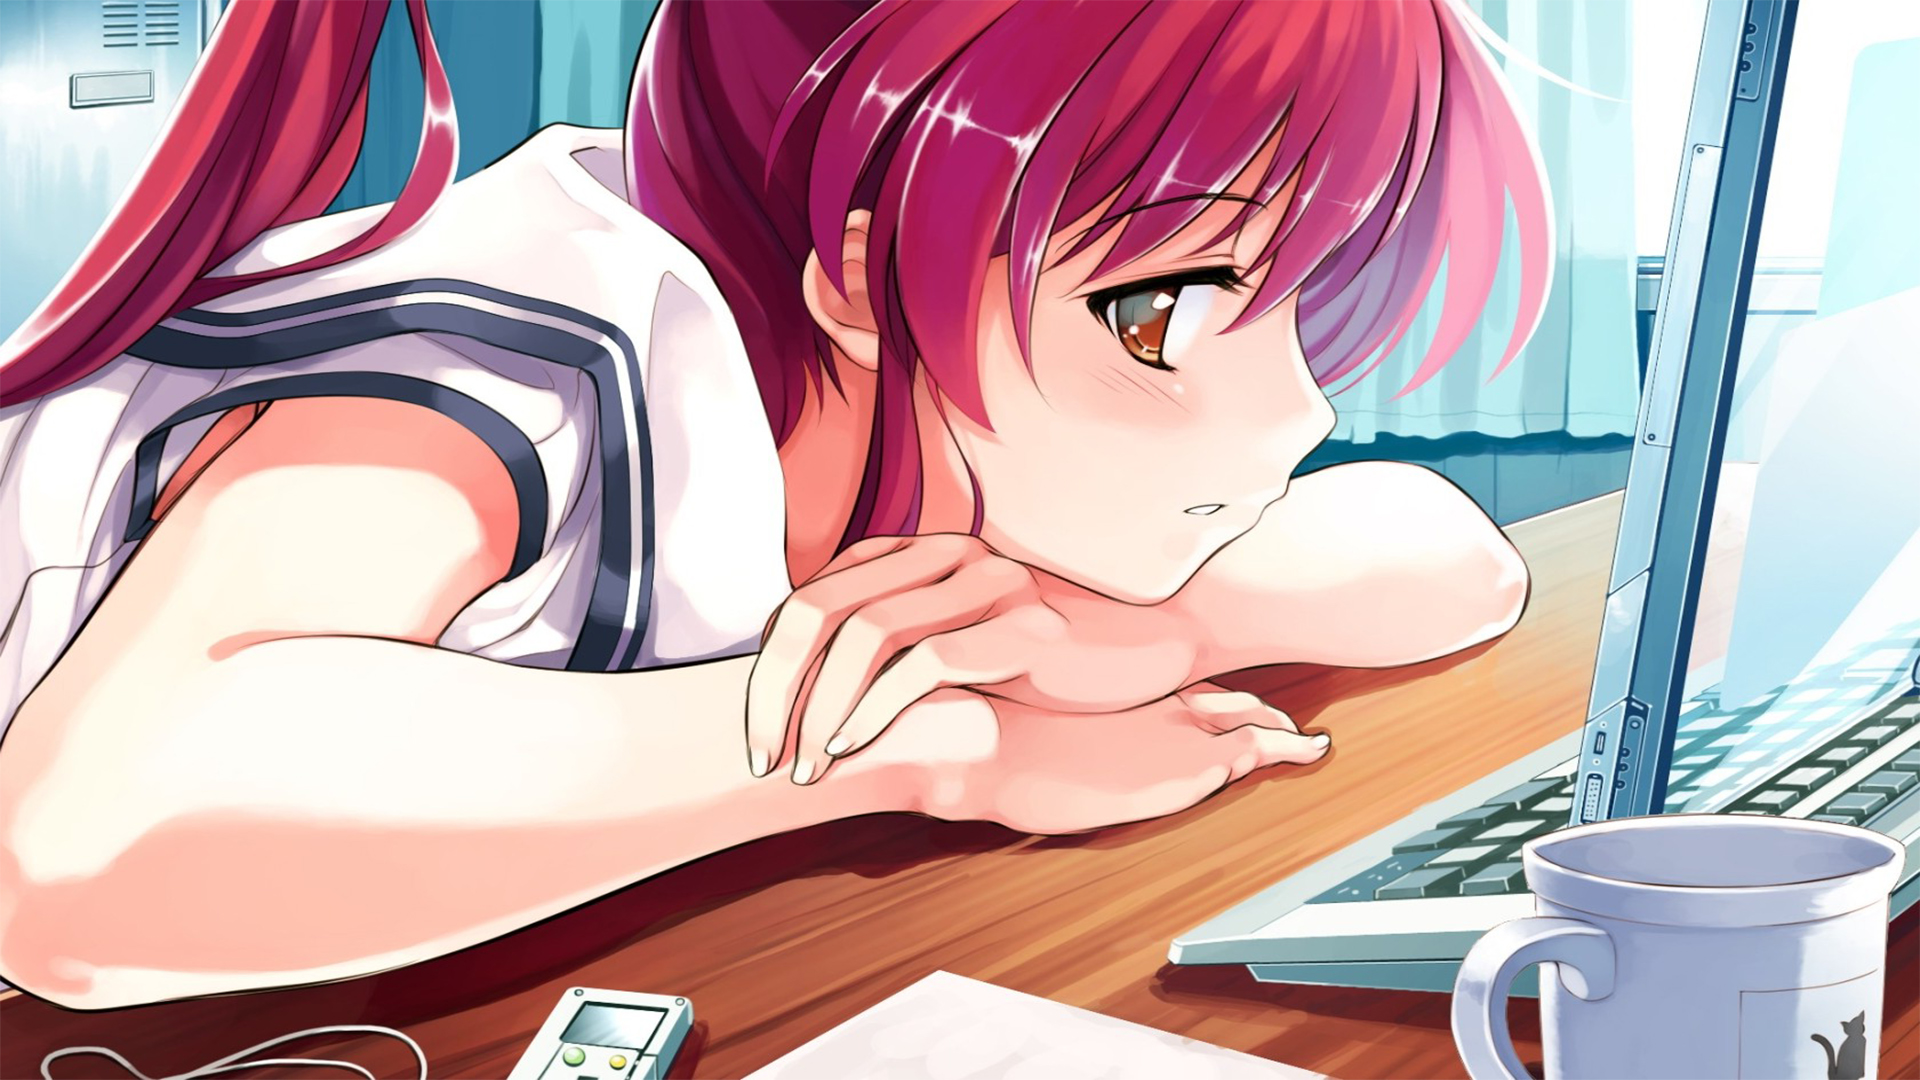 Deep Blue Sky & Pure White Wings, Miyamae Tomoka, Anime Girls, Computer, Coffee, Table, Manga Wallpaper